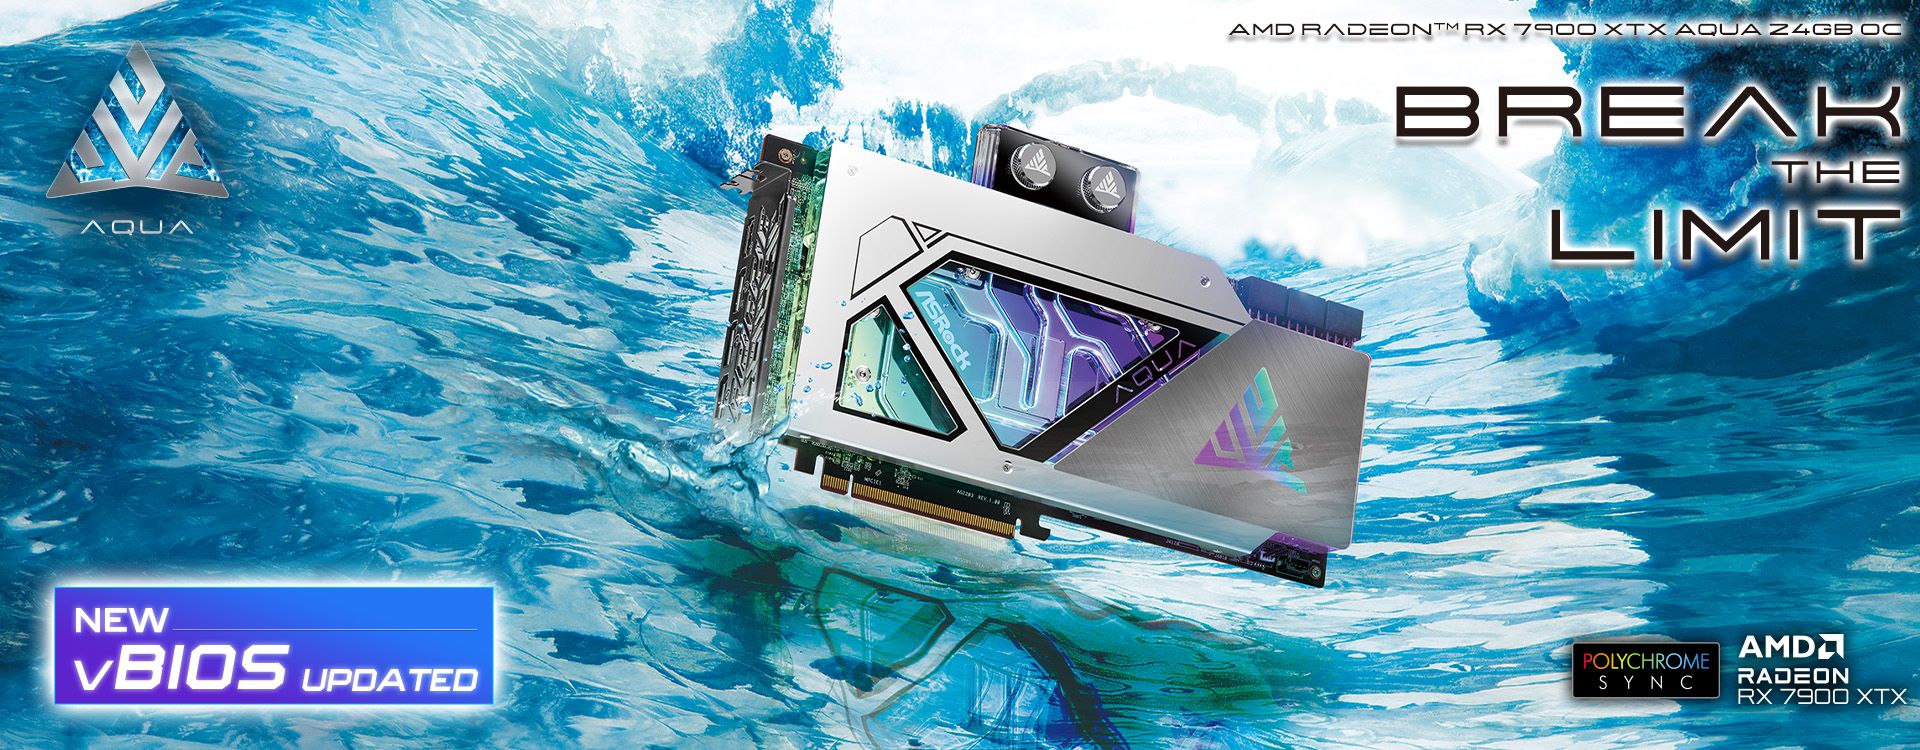 AMD RADEON RX 7900 XTX AQUA VBIOSアップデート